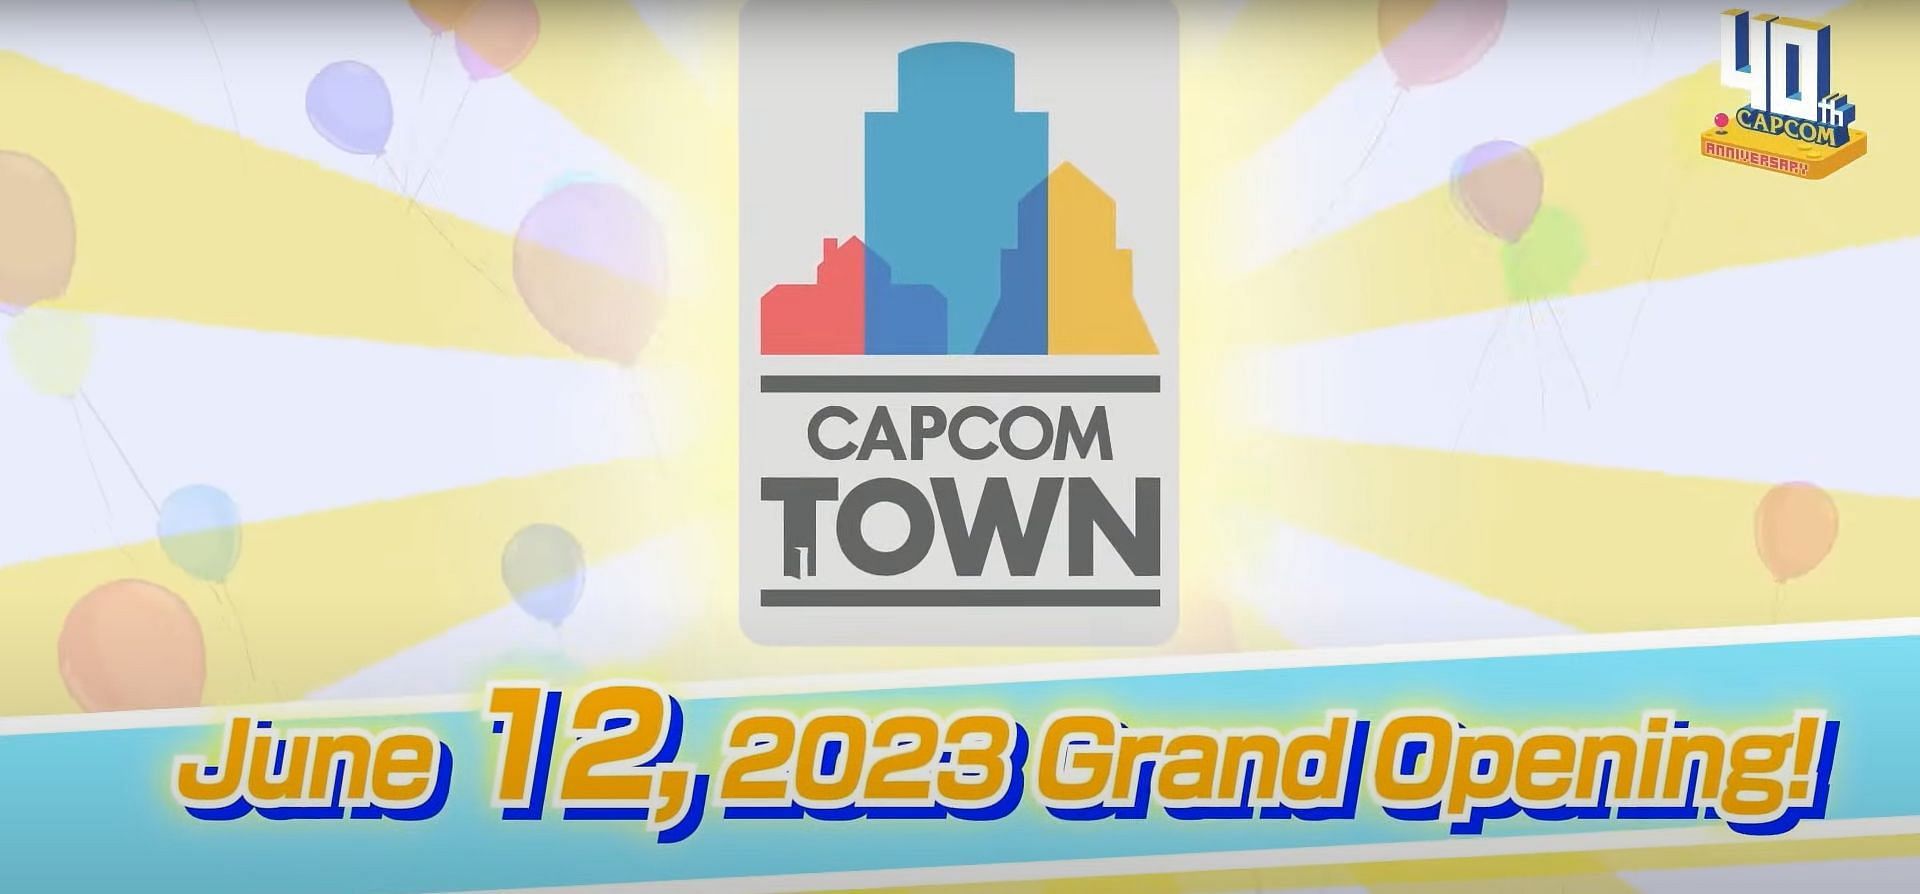 The grand opening is on June 12th (Image via Capcom Spotlight)